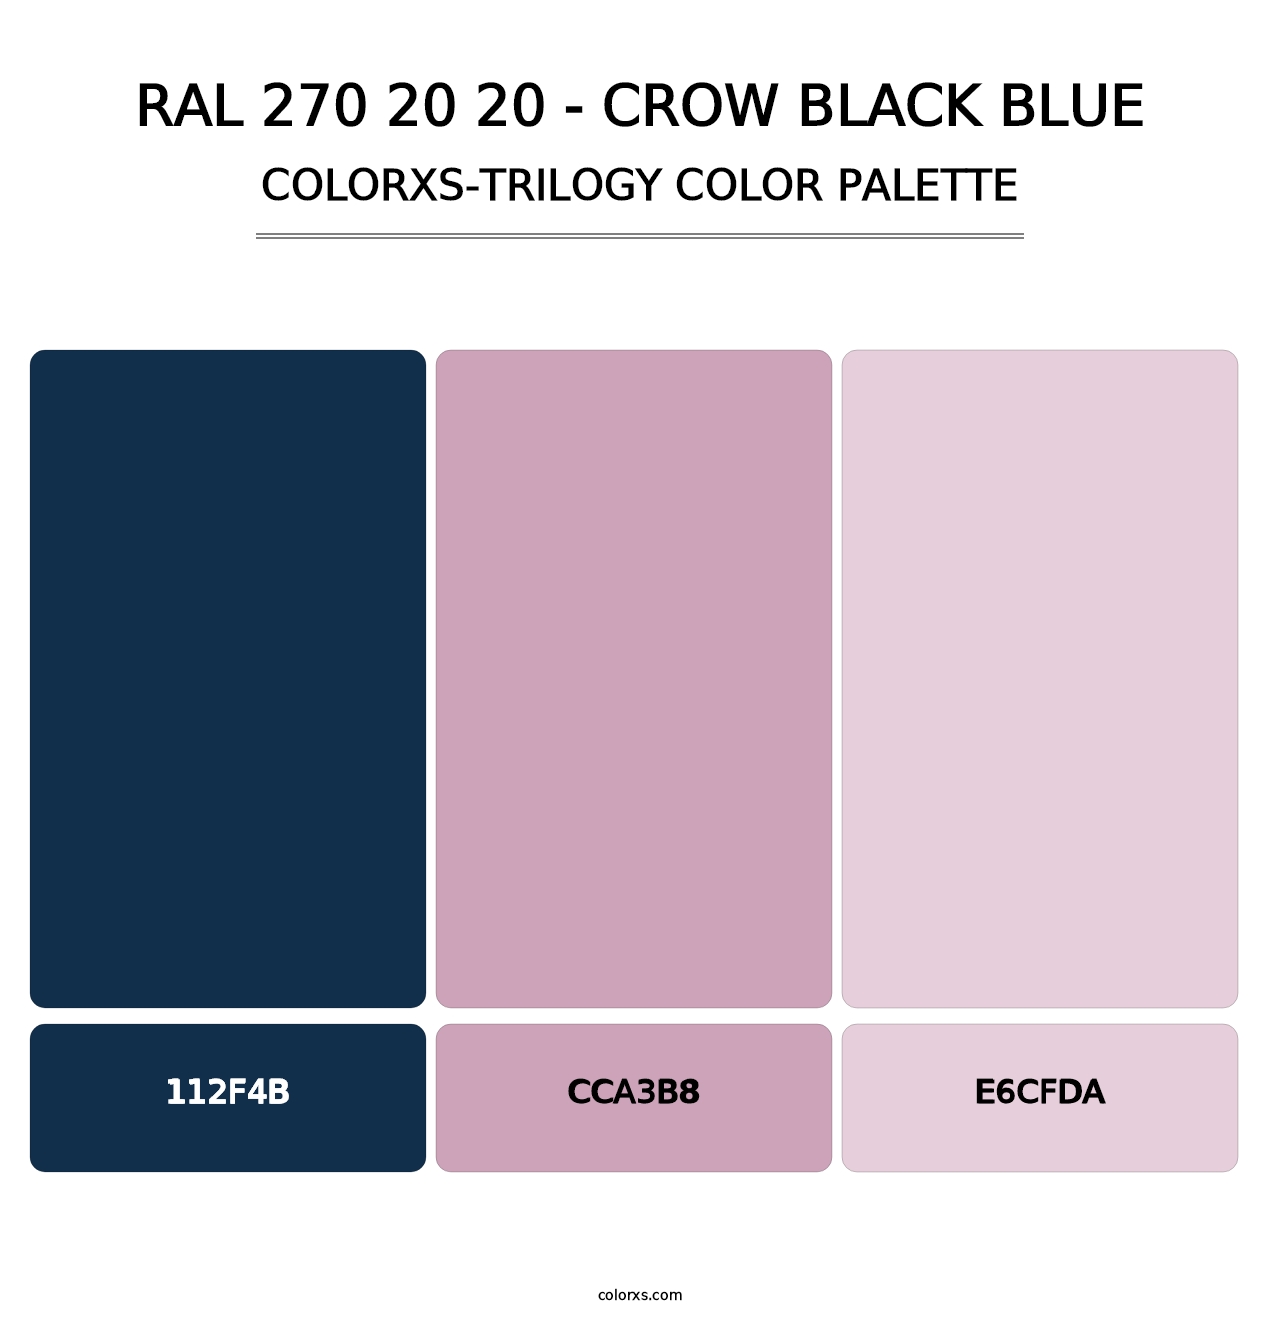 RAL 270 20 20 - Crow Black Blue - Colorxs Trilogy Palette